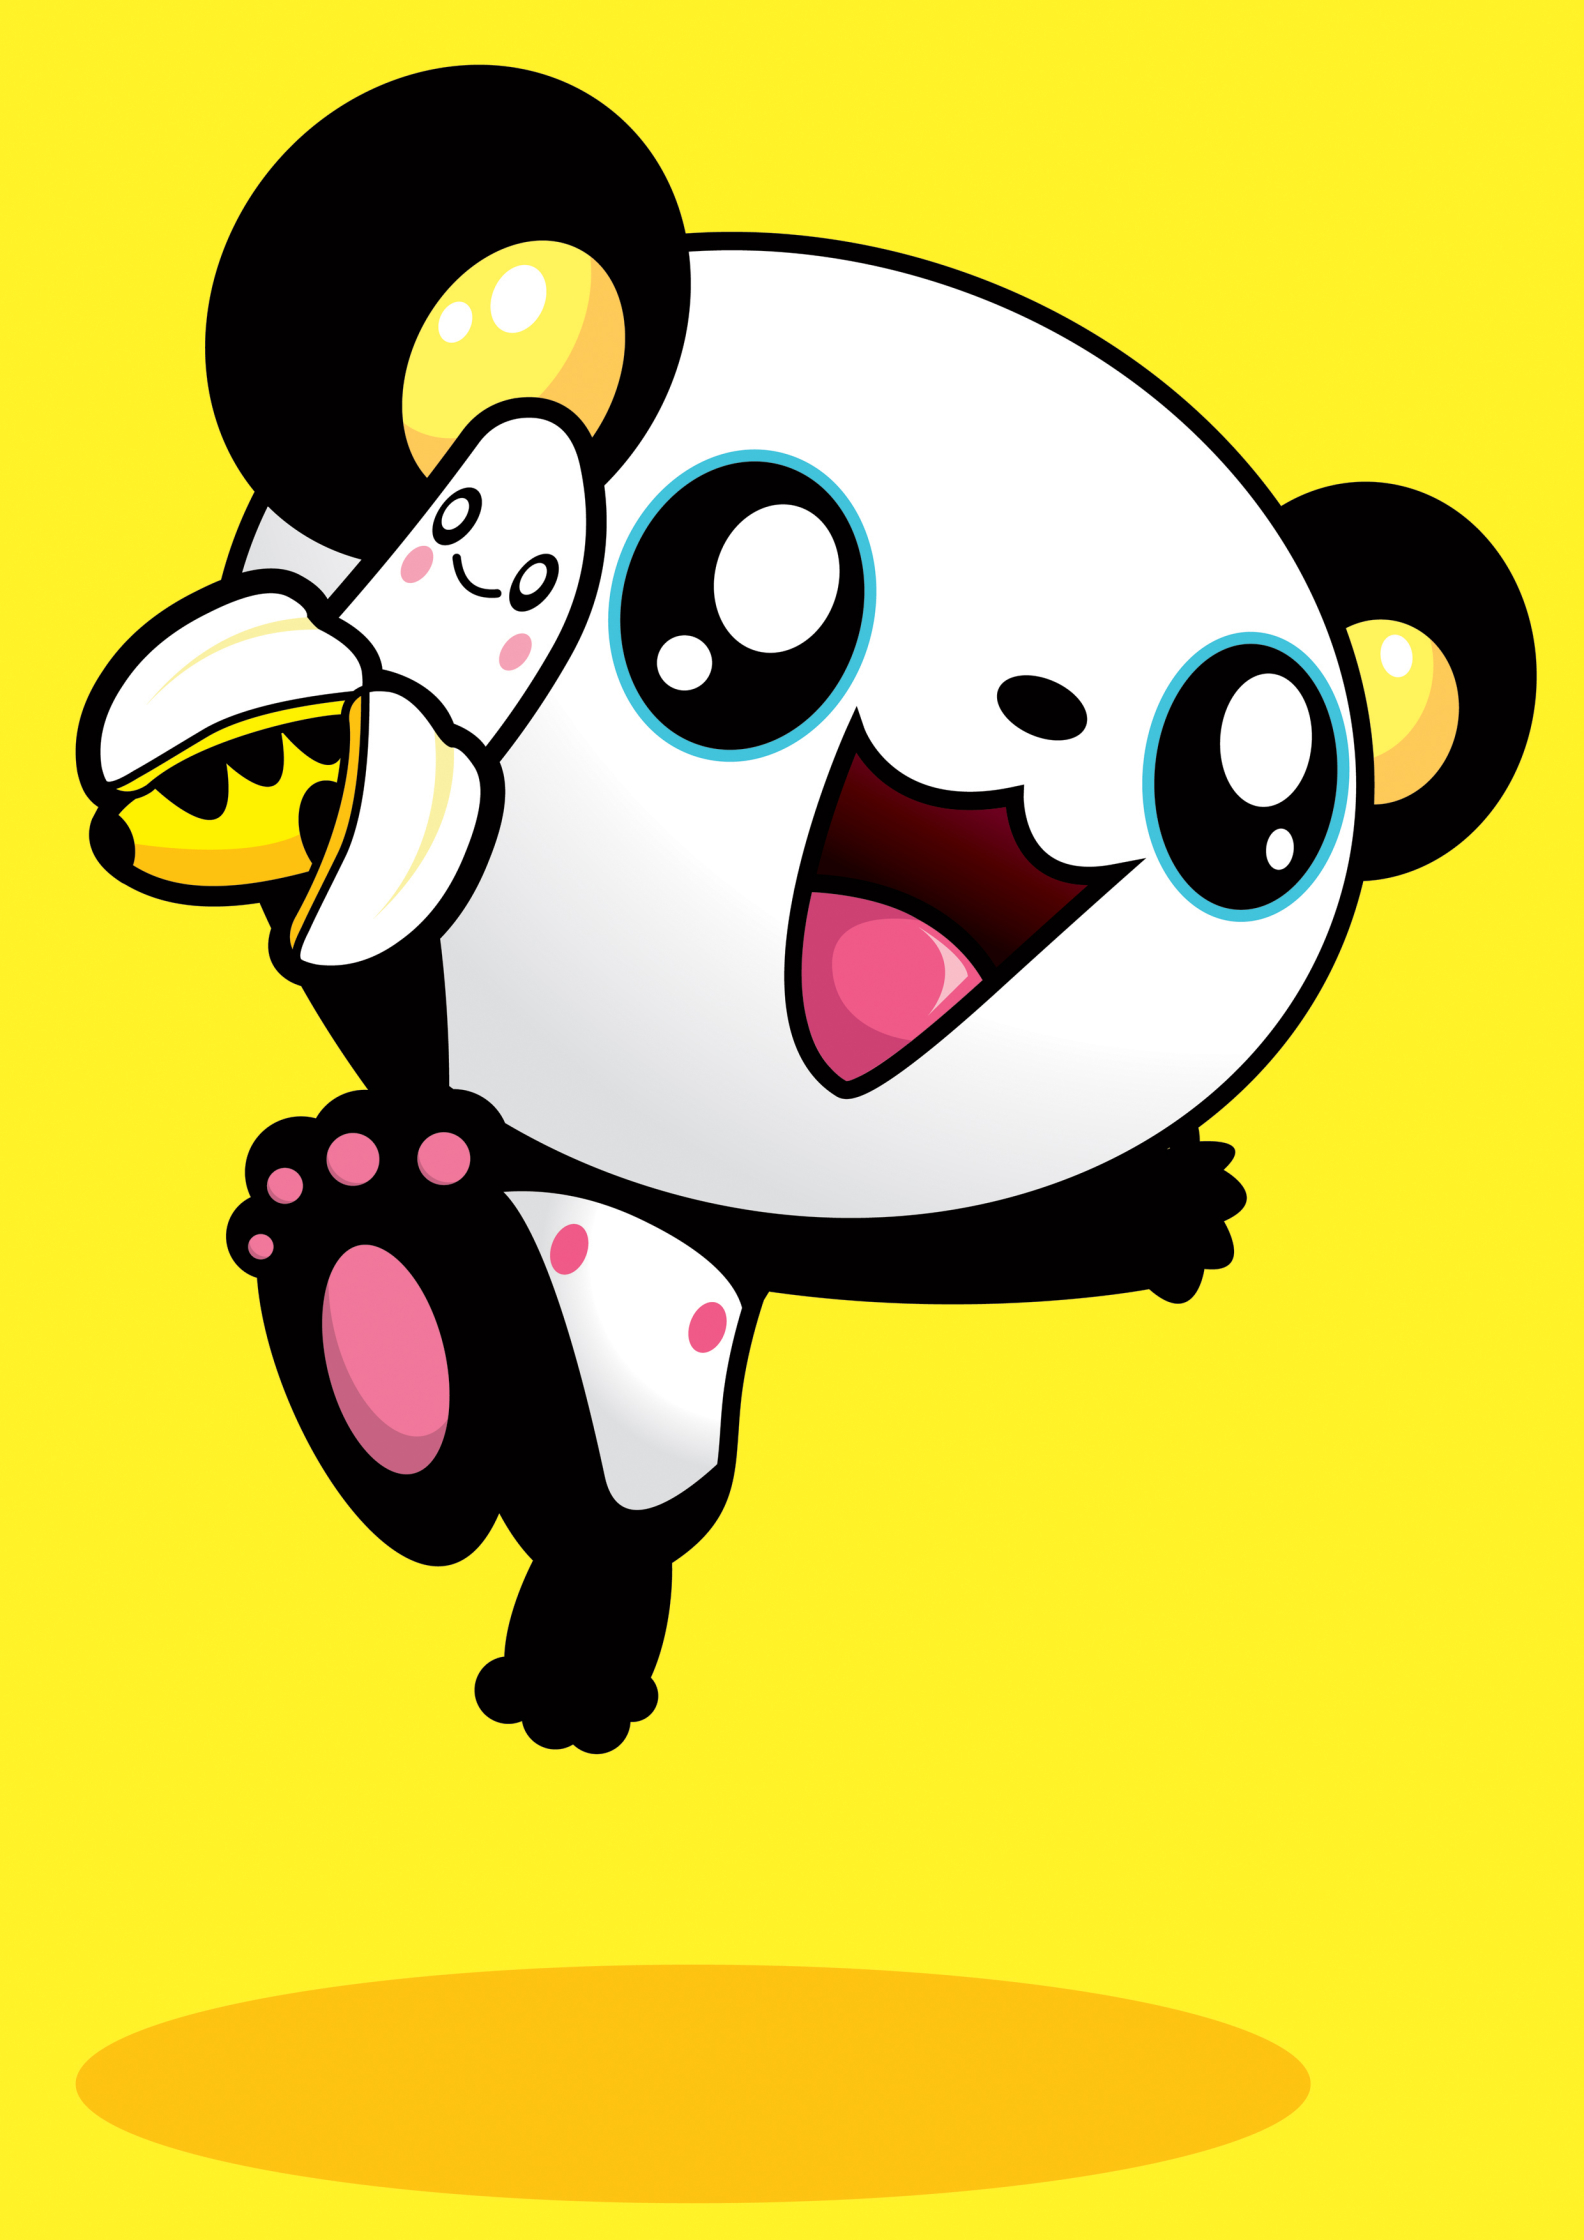 Jumping Panda Character